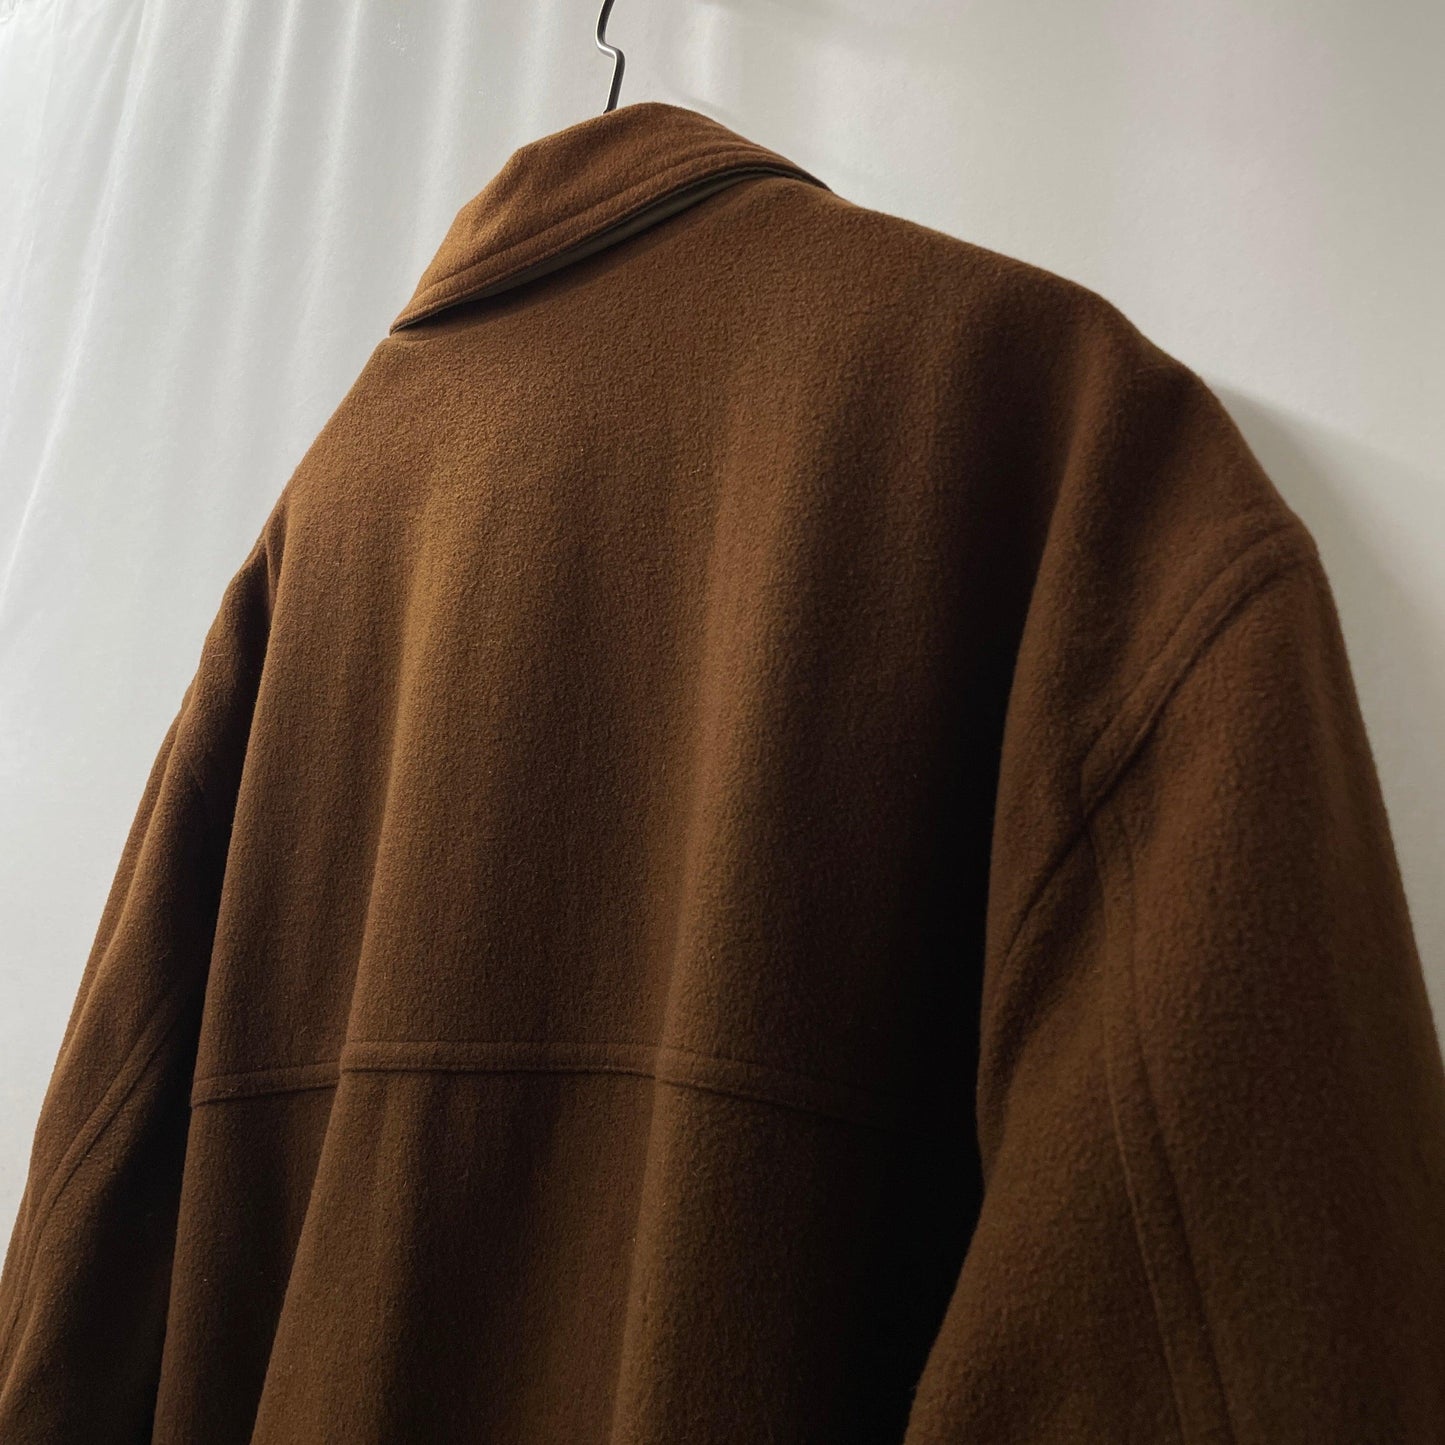 burberry jacket coatreversible coat/jacket